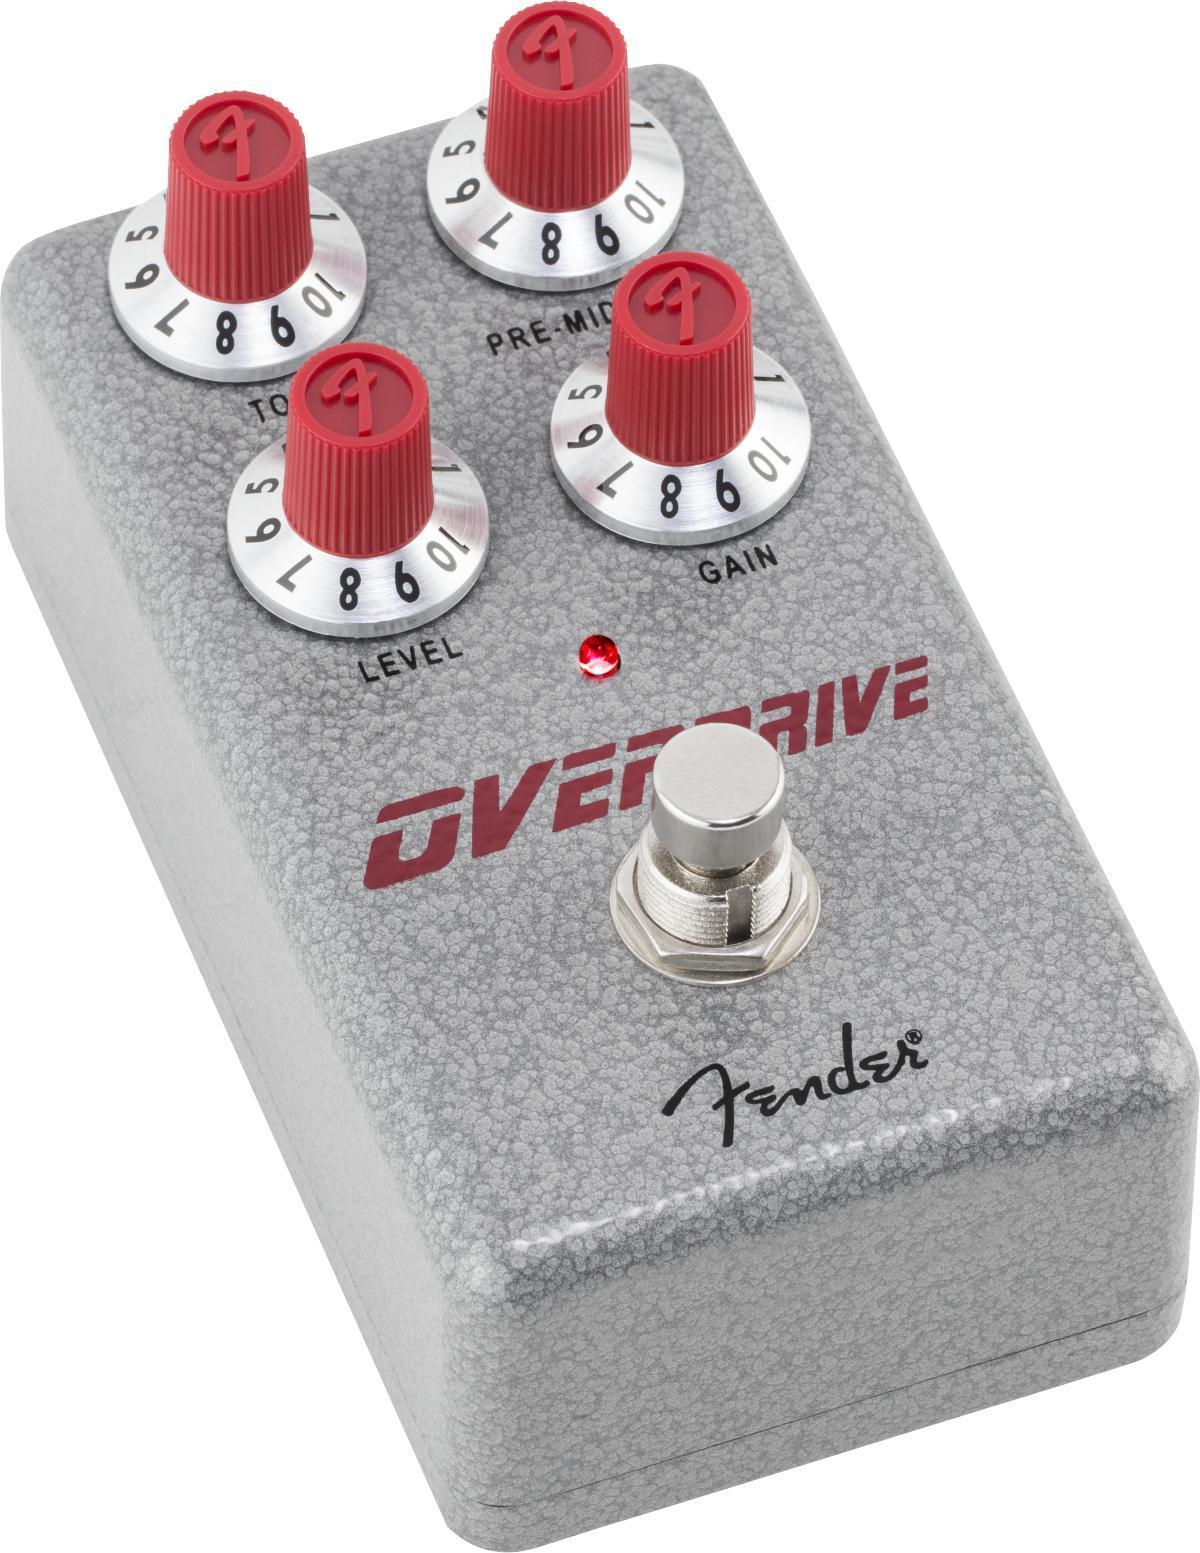 Overdrive, distortion & fuzz effect pedal Fender HAMMERTONE OVERDRIVE